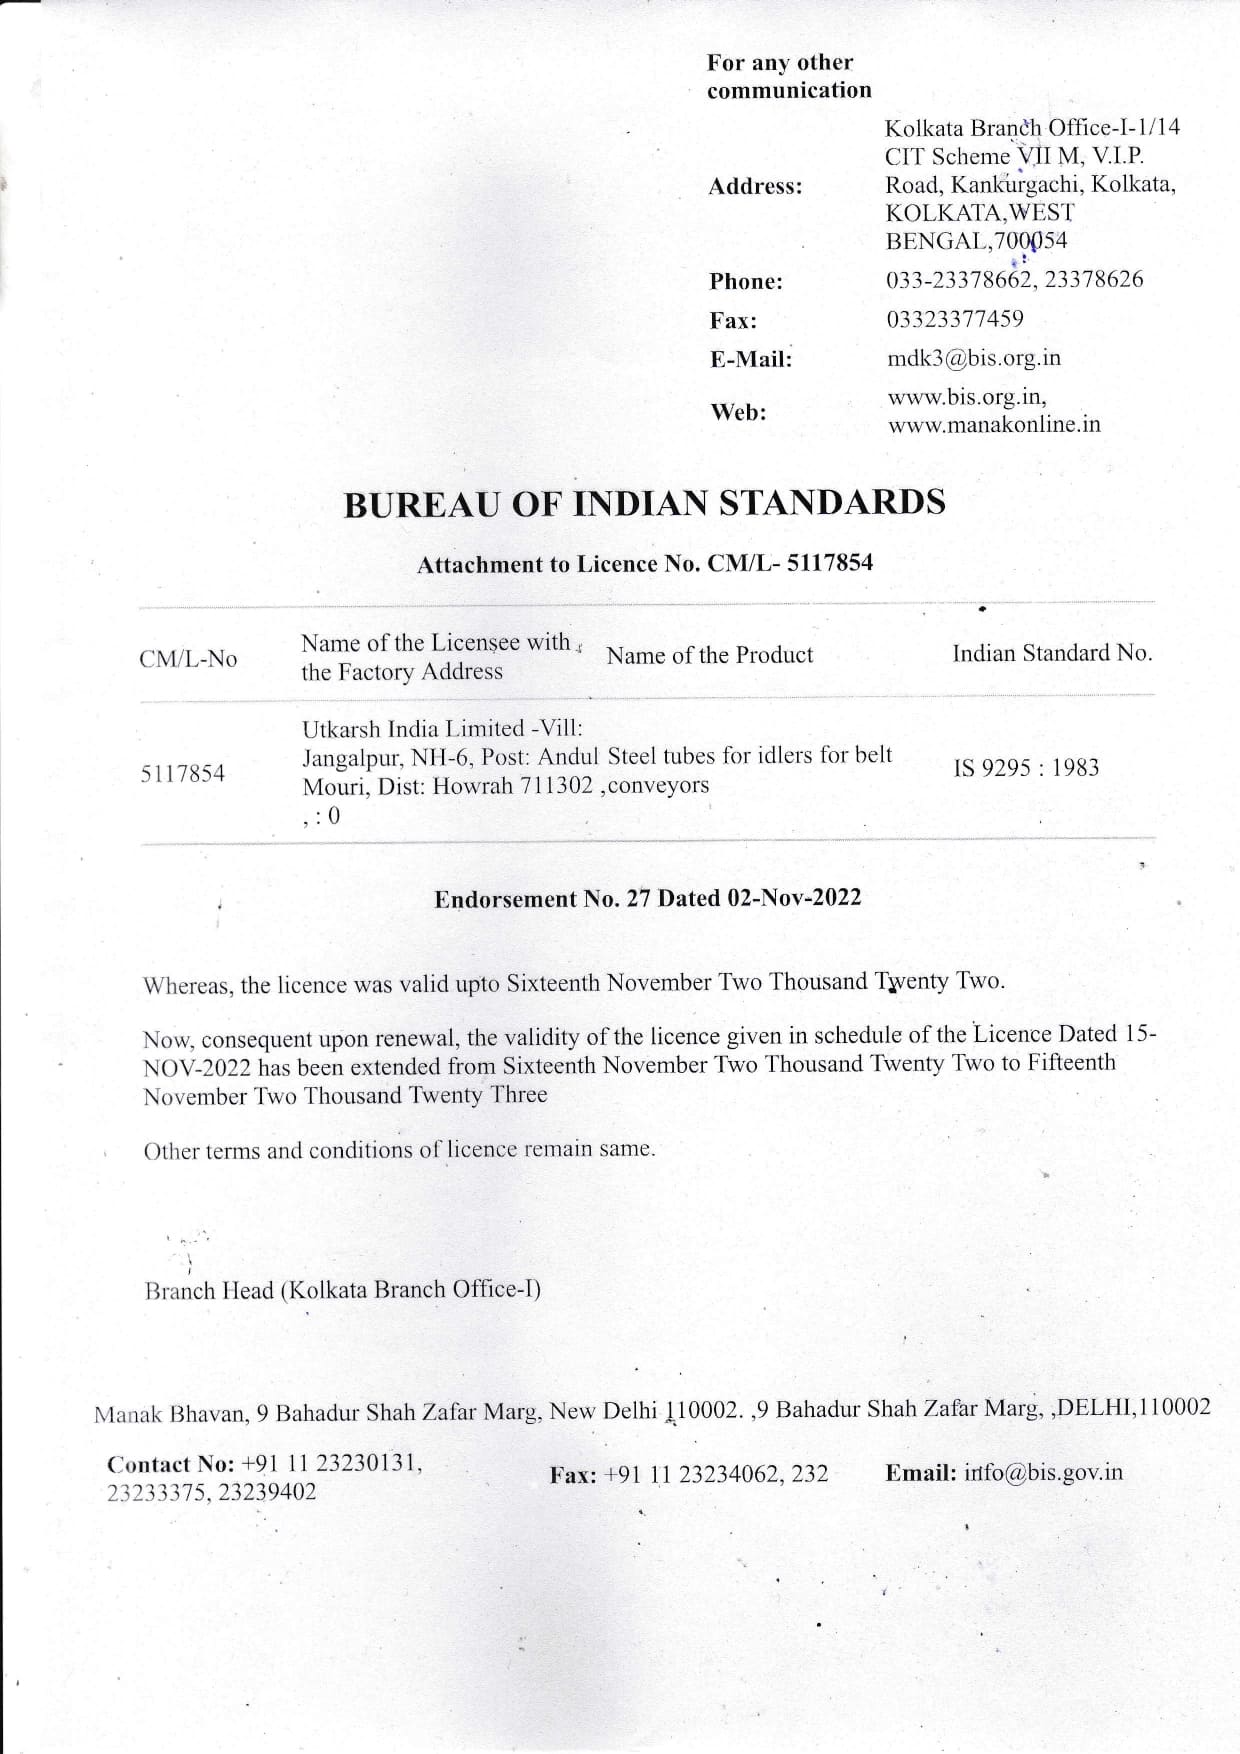 Bureau of Indian Standards IS 9295 1983